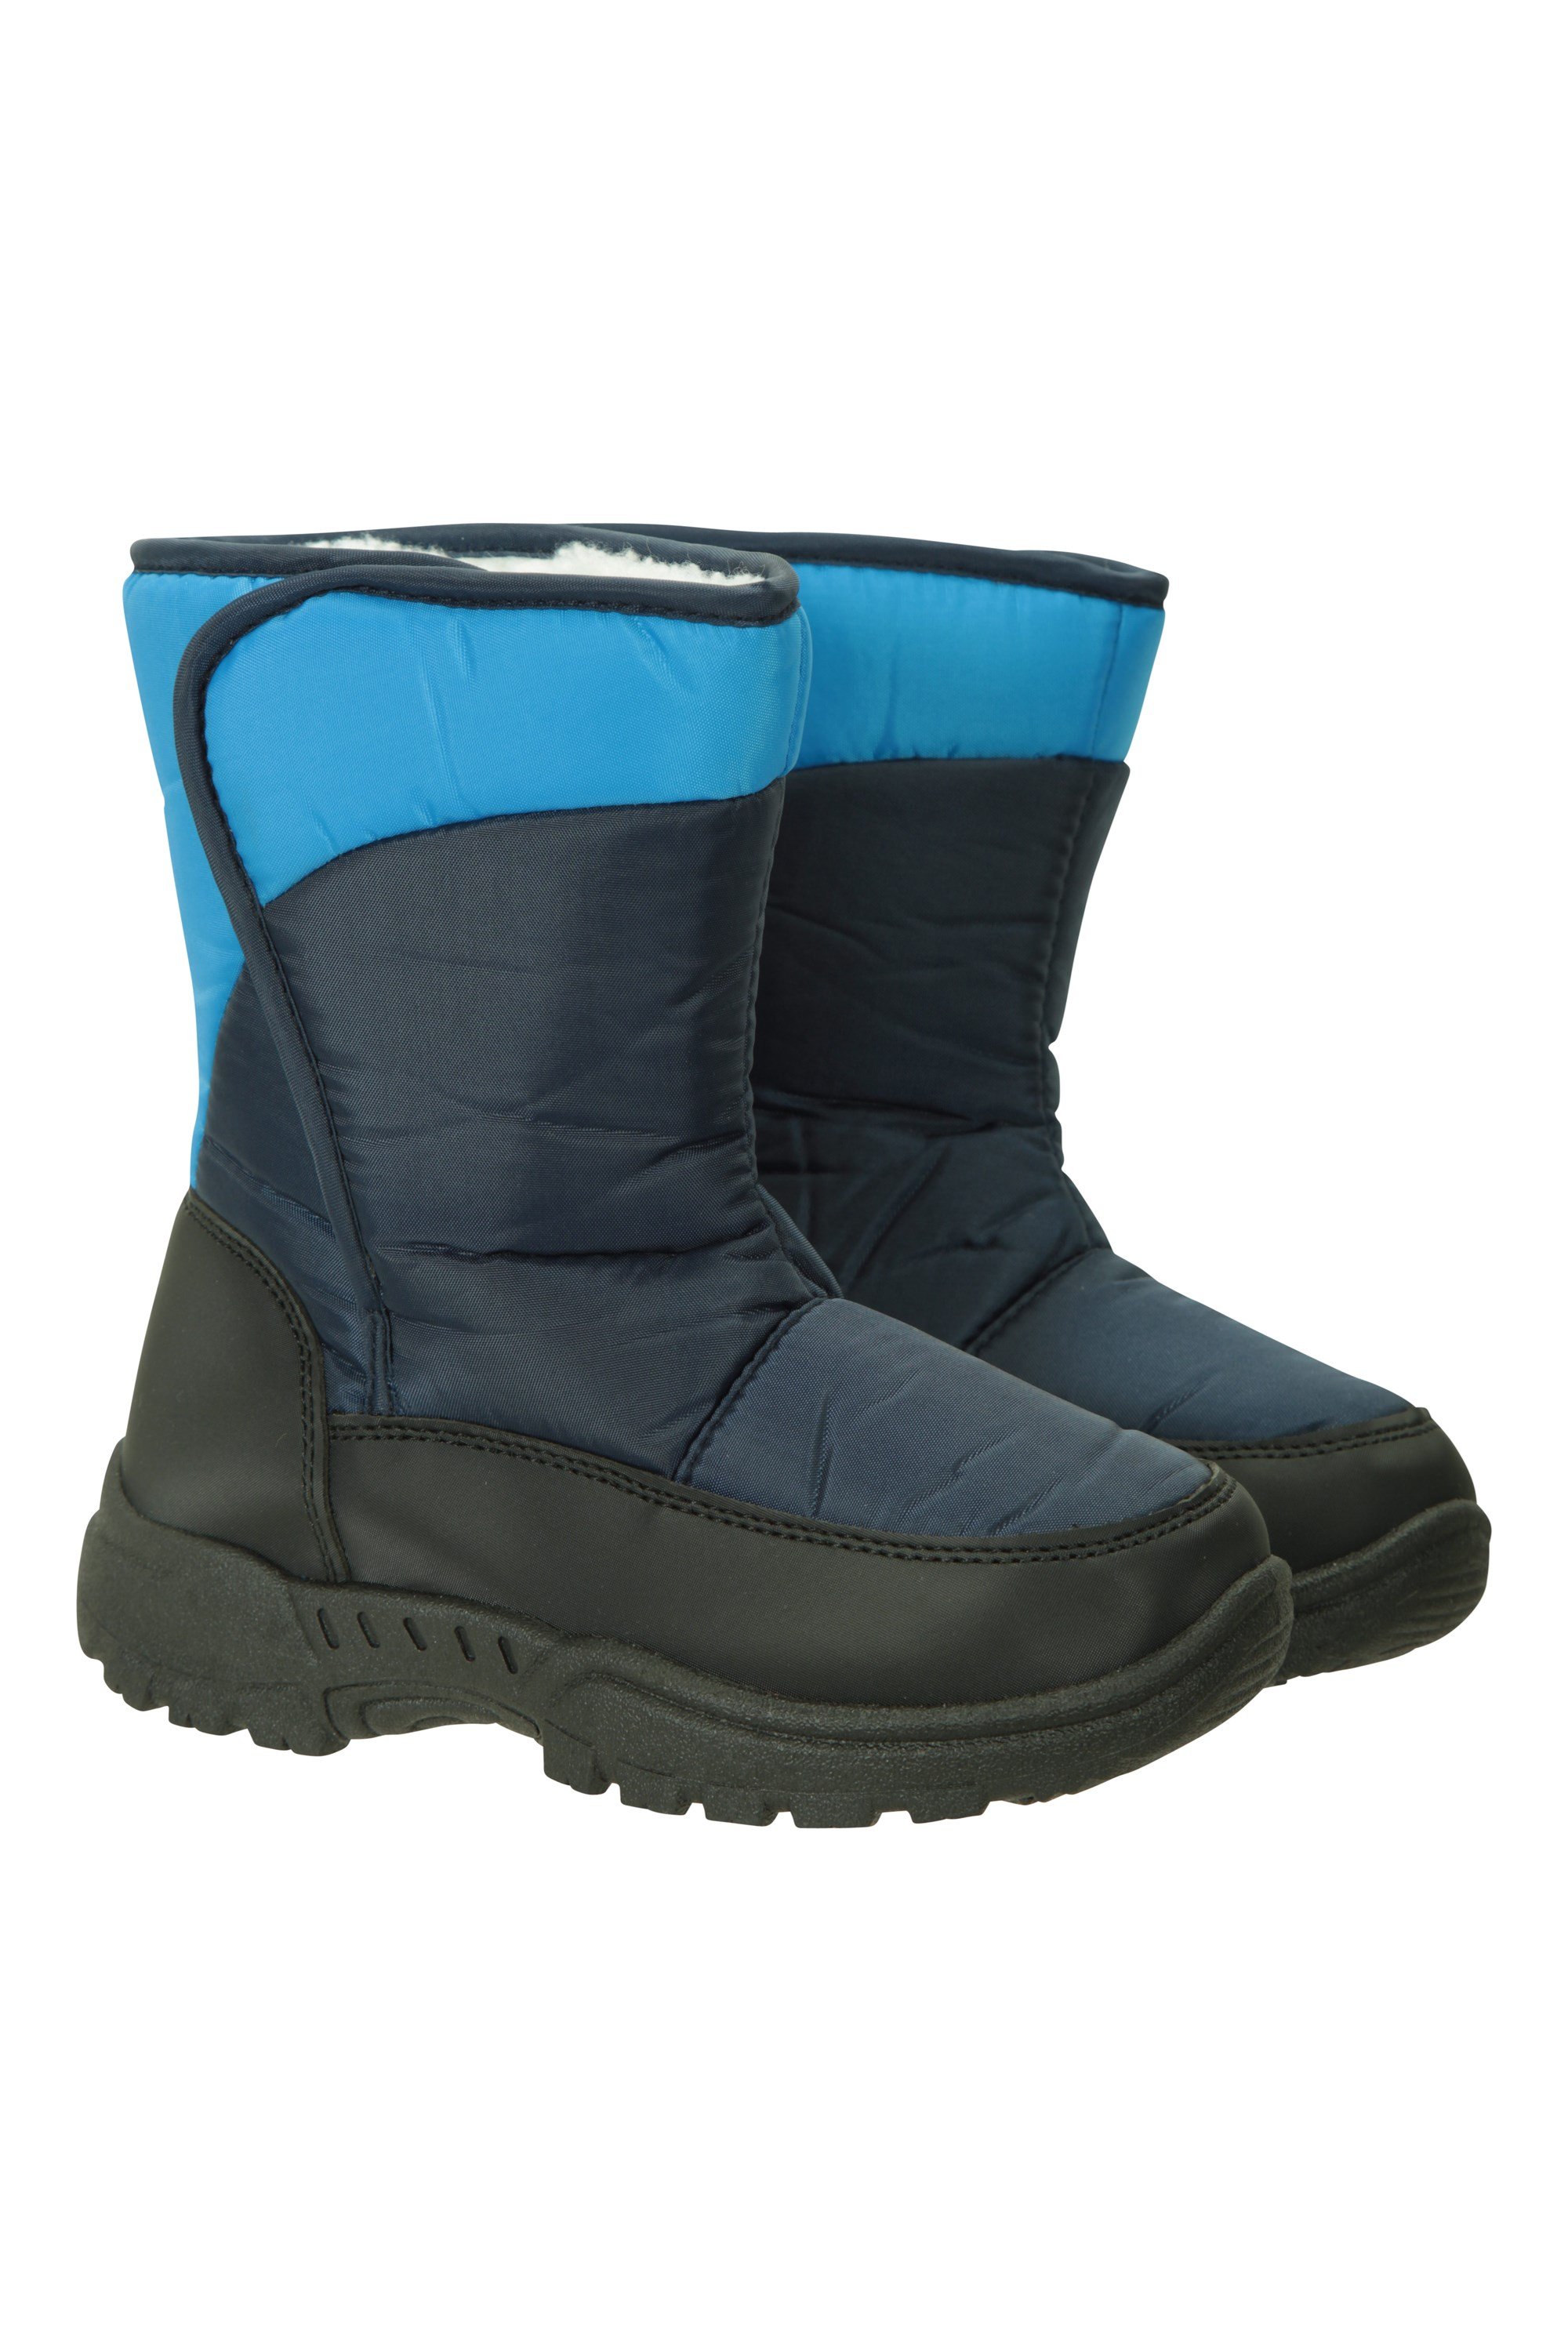 Kids Caribou Single Stripe Adaptive Snow Boots - Dark Blue